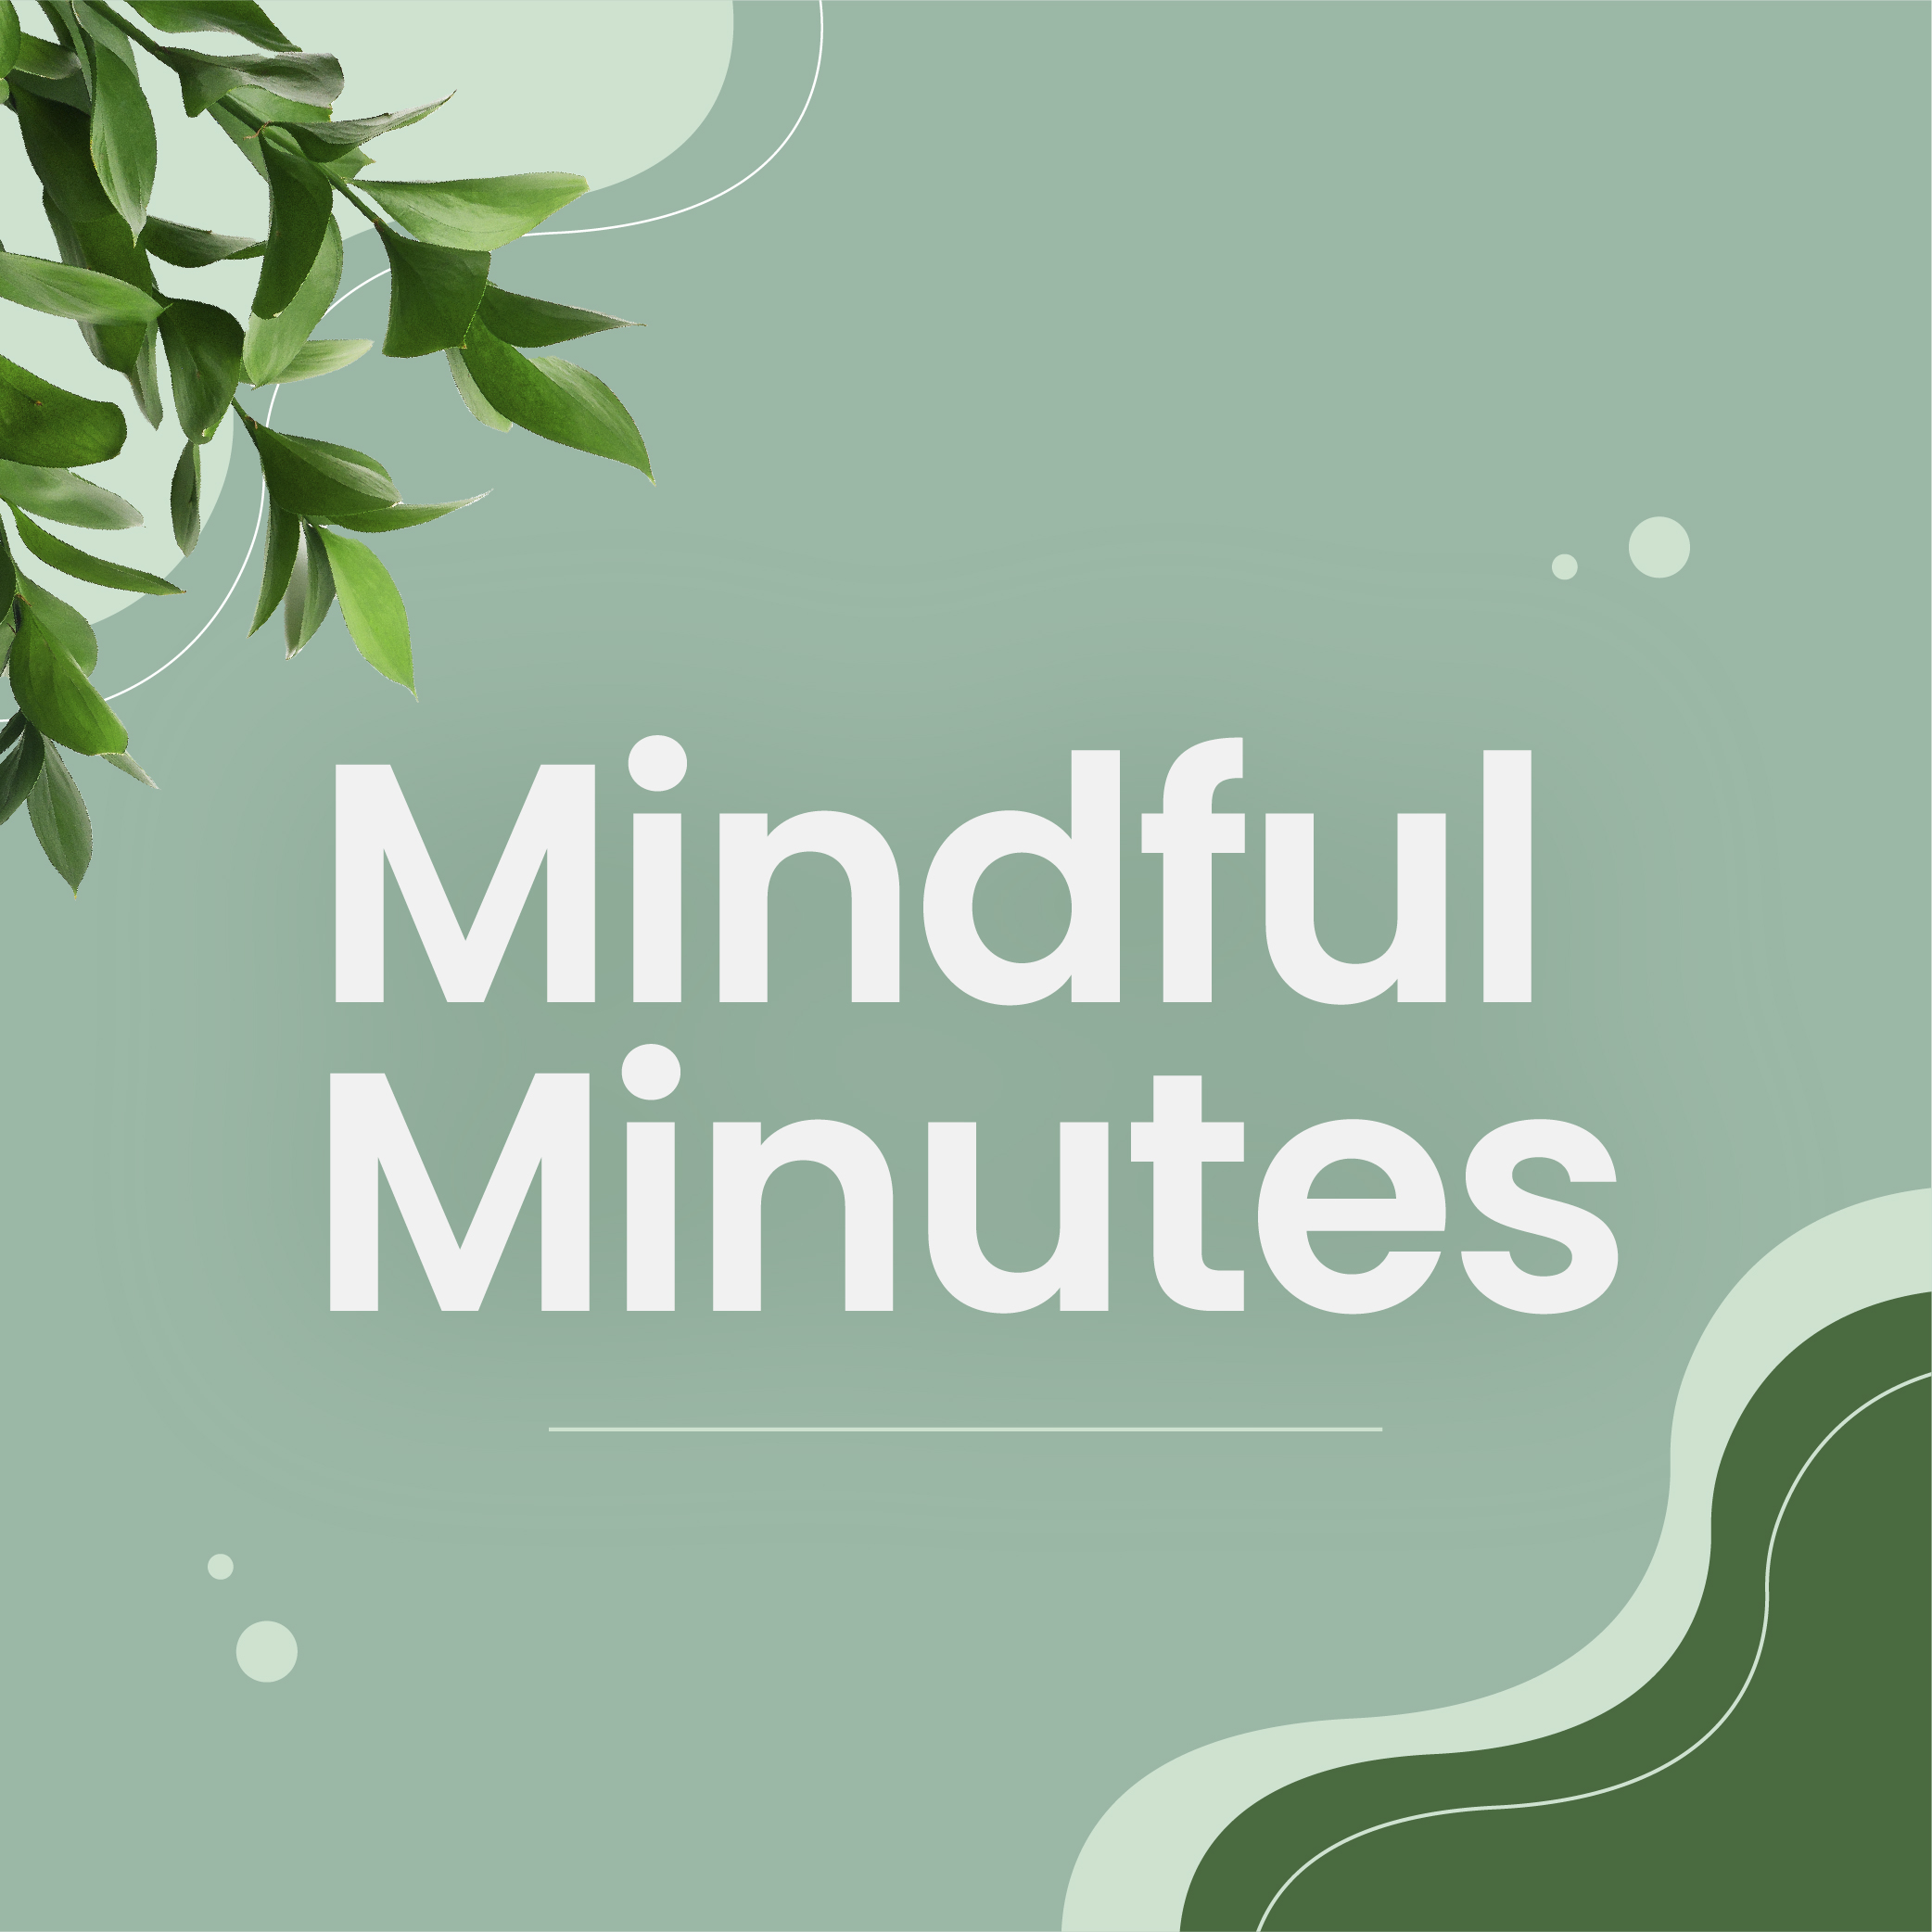 mindful minutes 